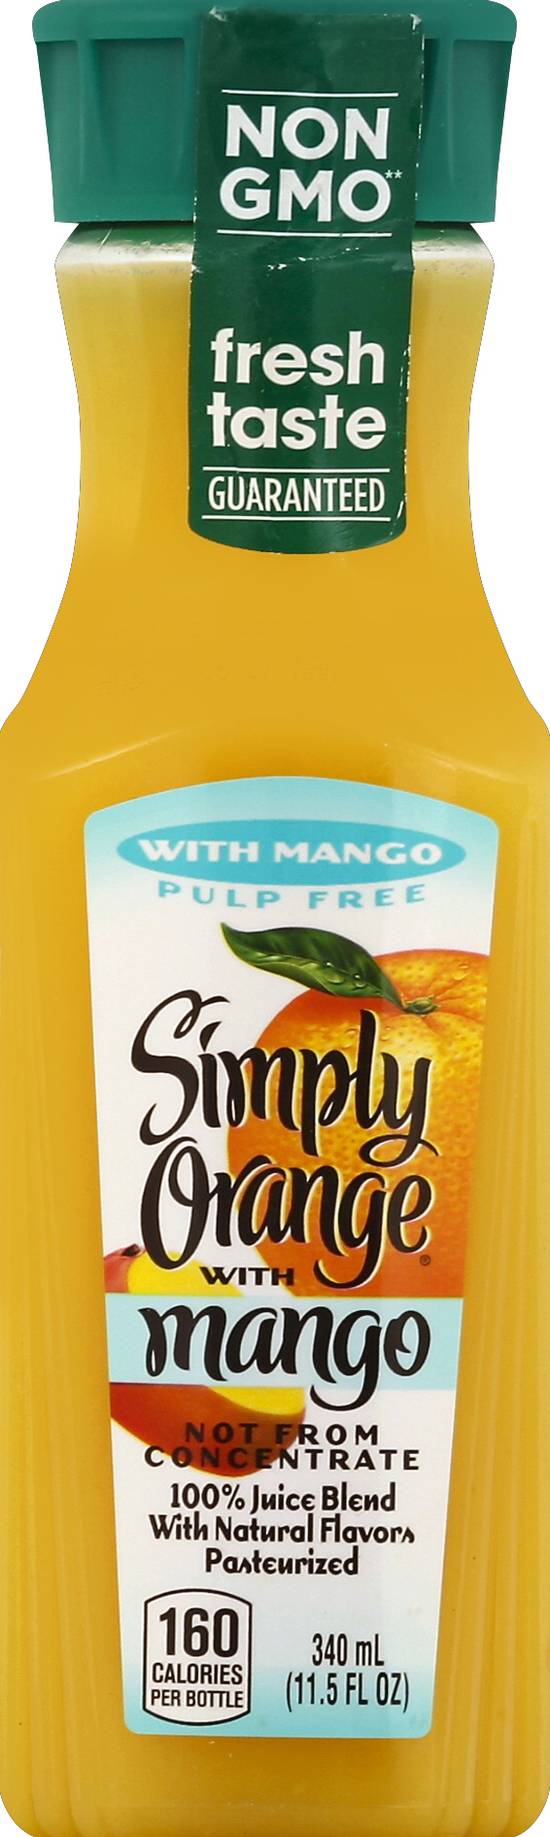 Simply Orange Mango Juice Blend (11.5 fl oz)